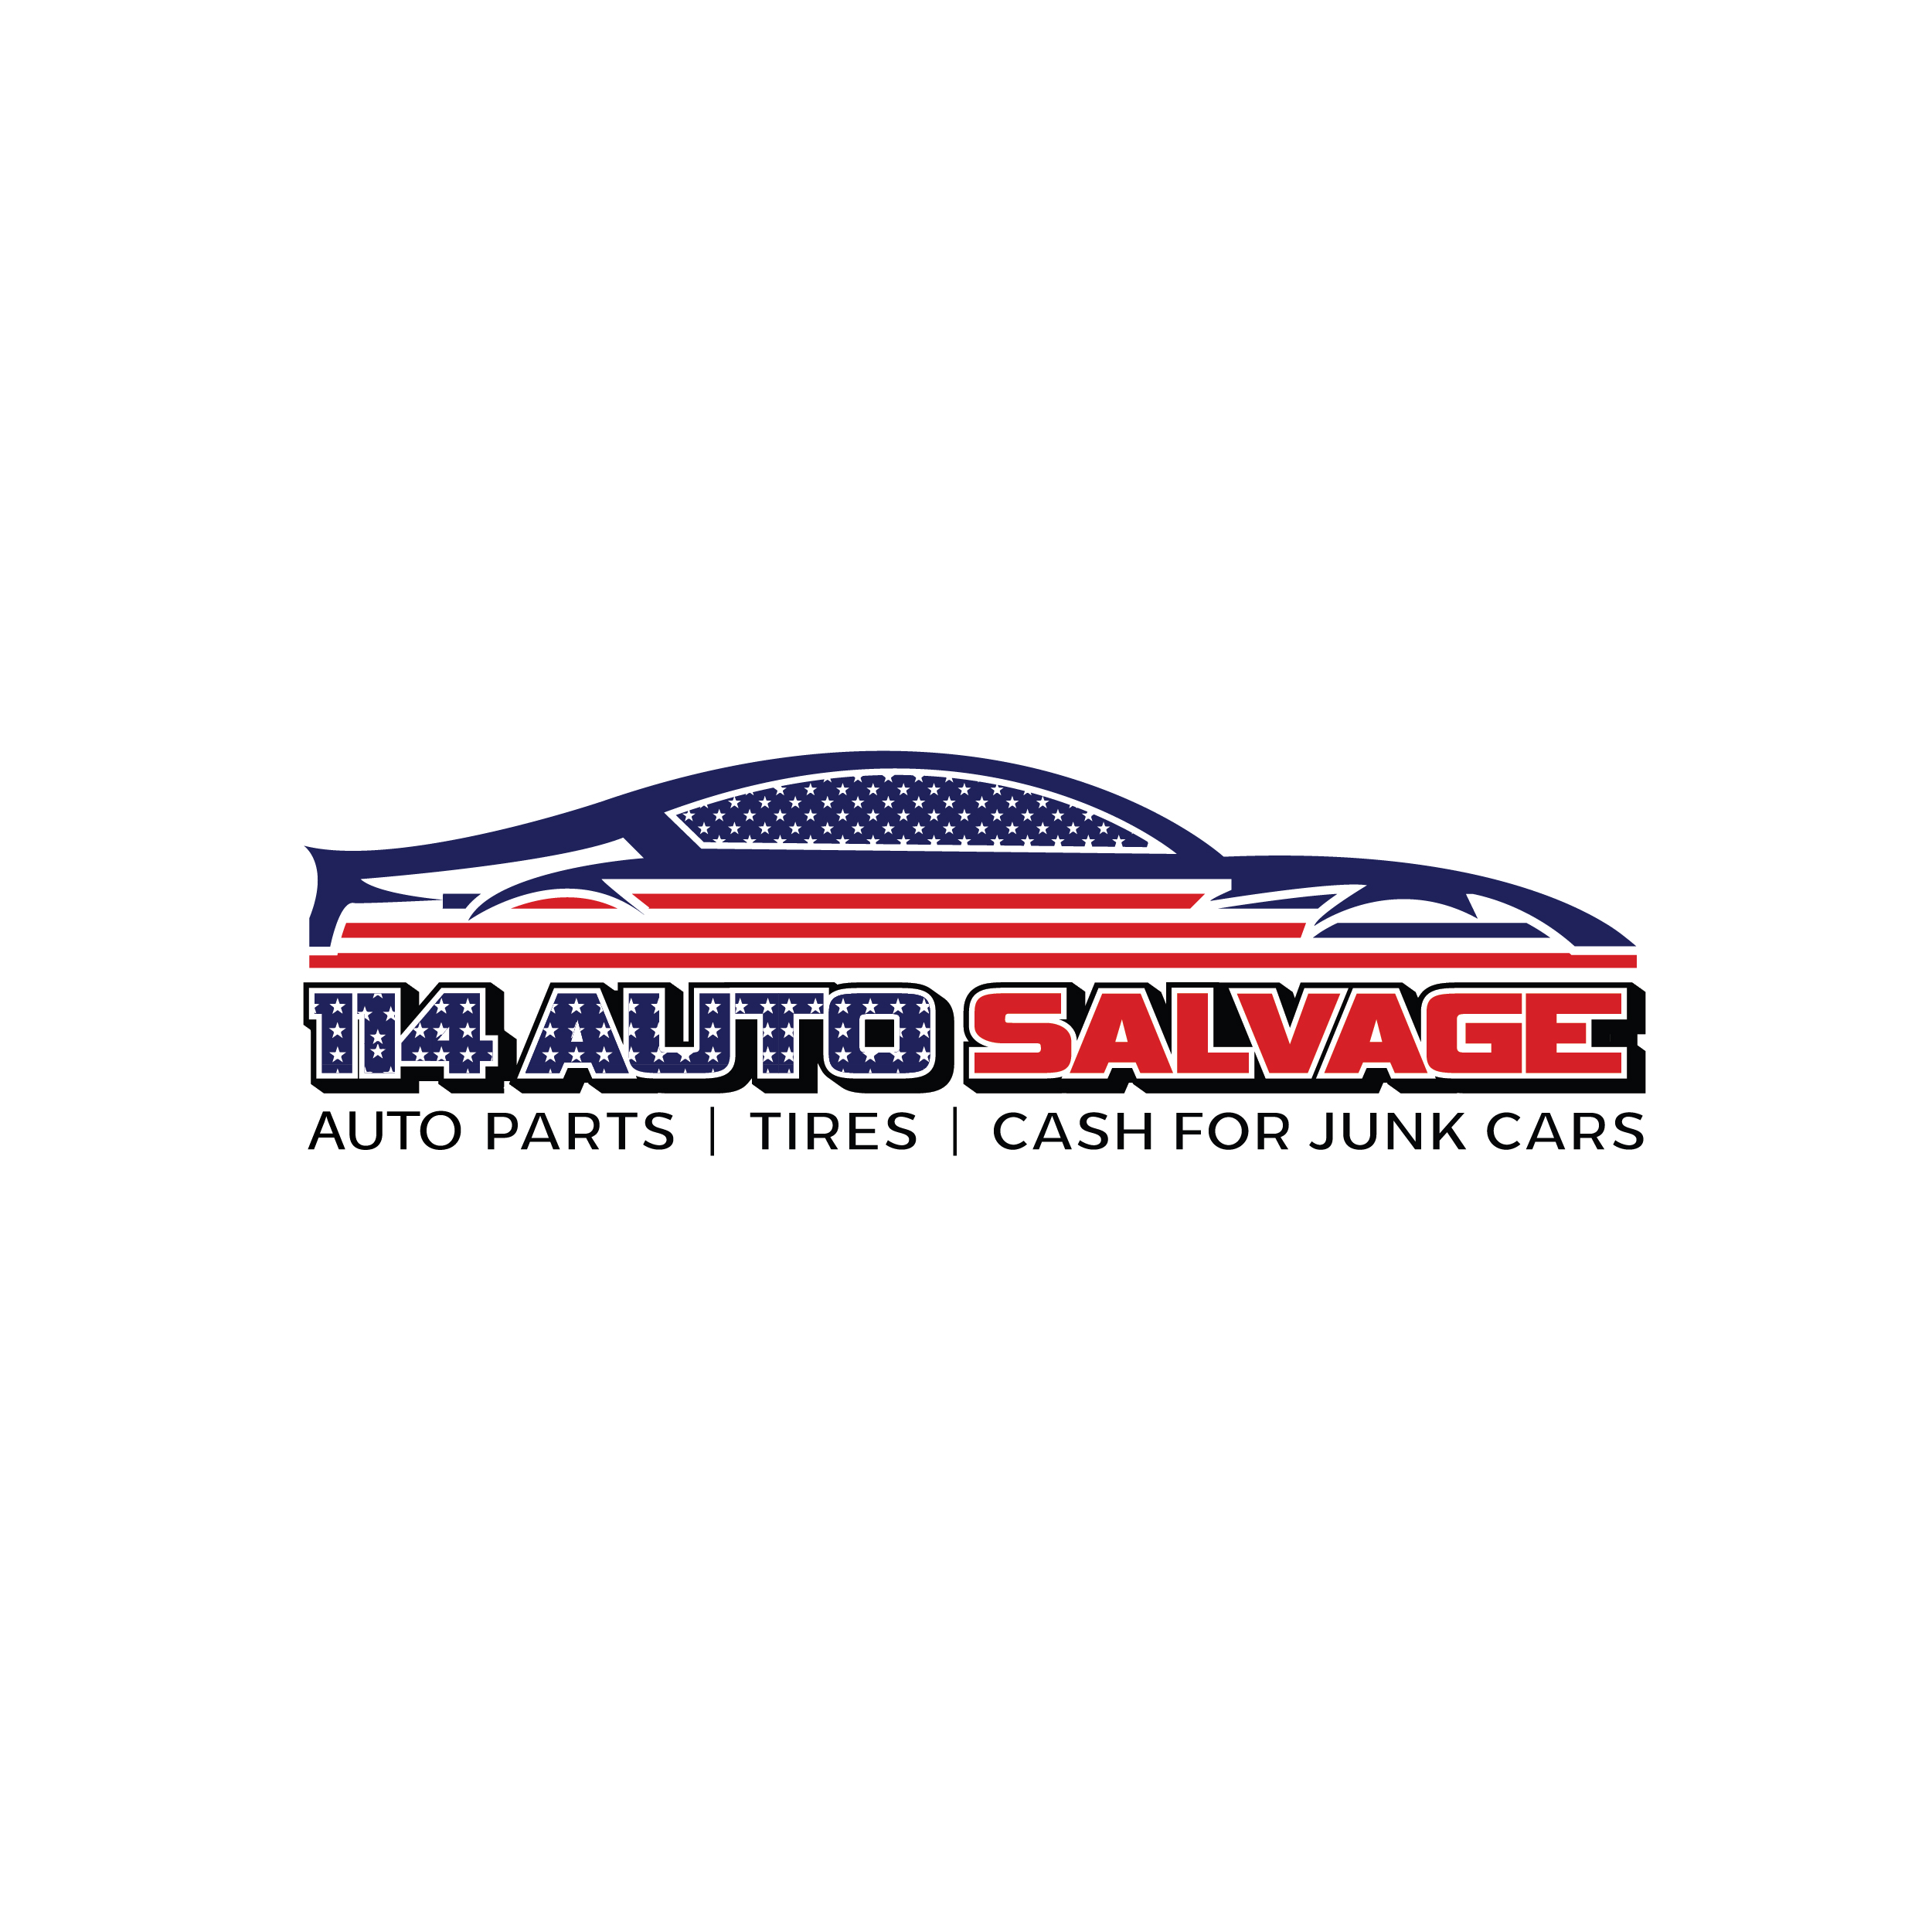 114 Auto Salvage - Cash For Junk Cars Logo